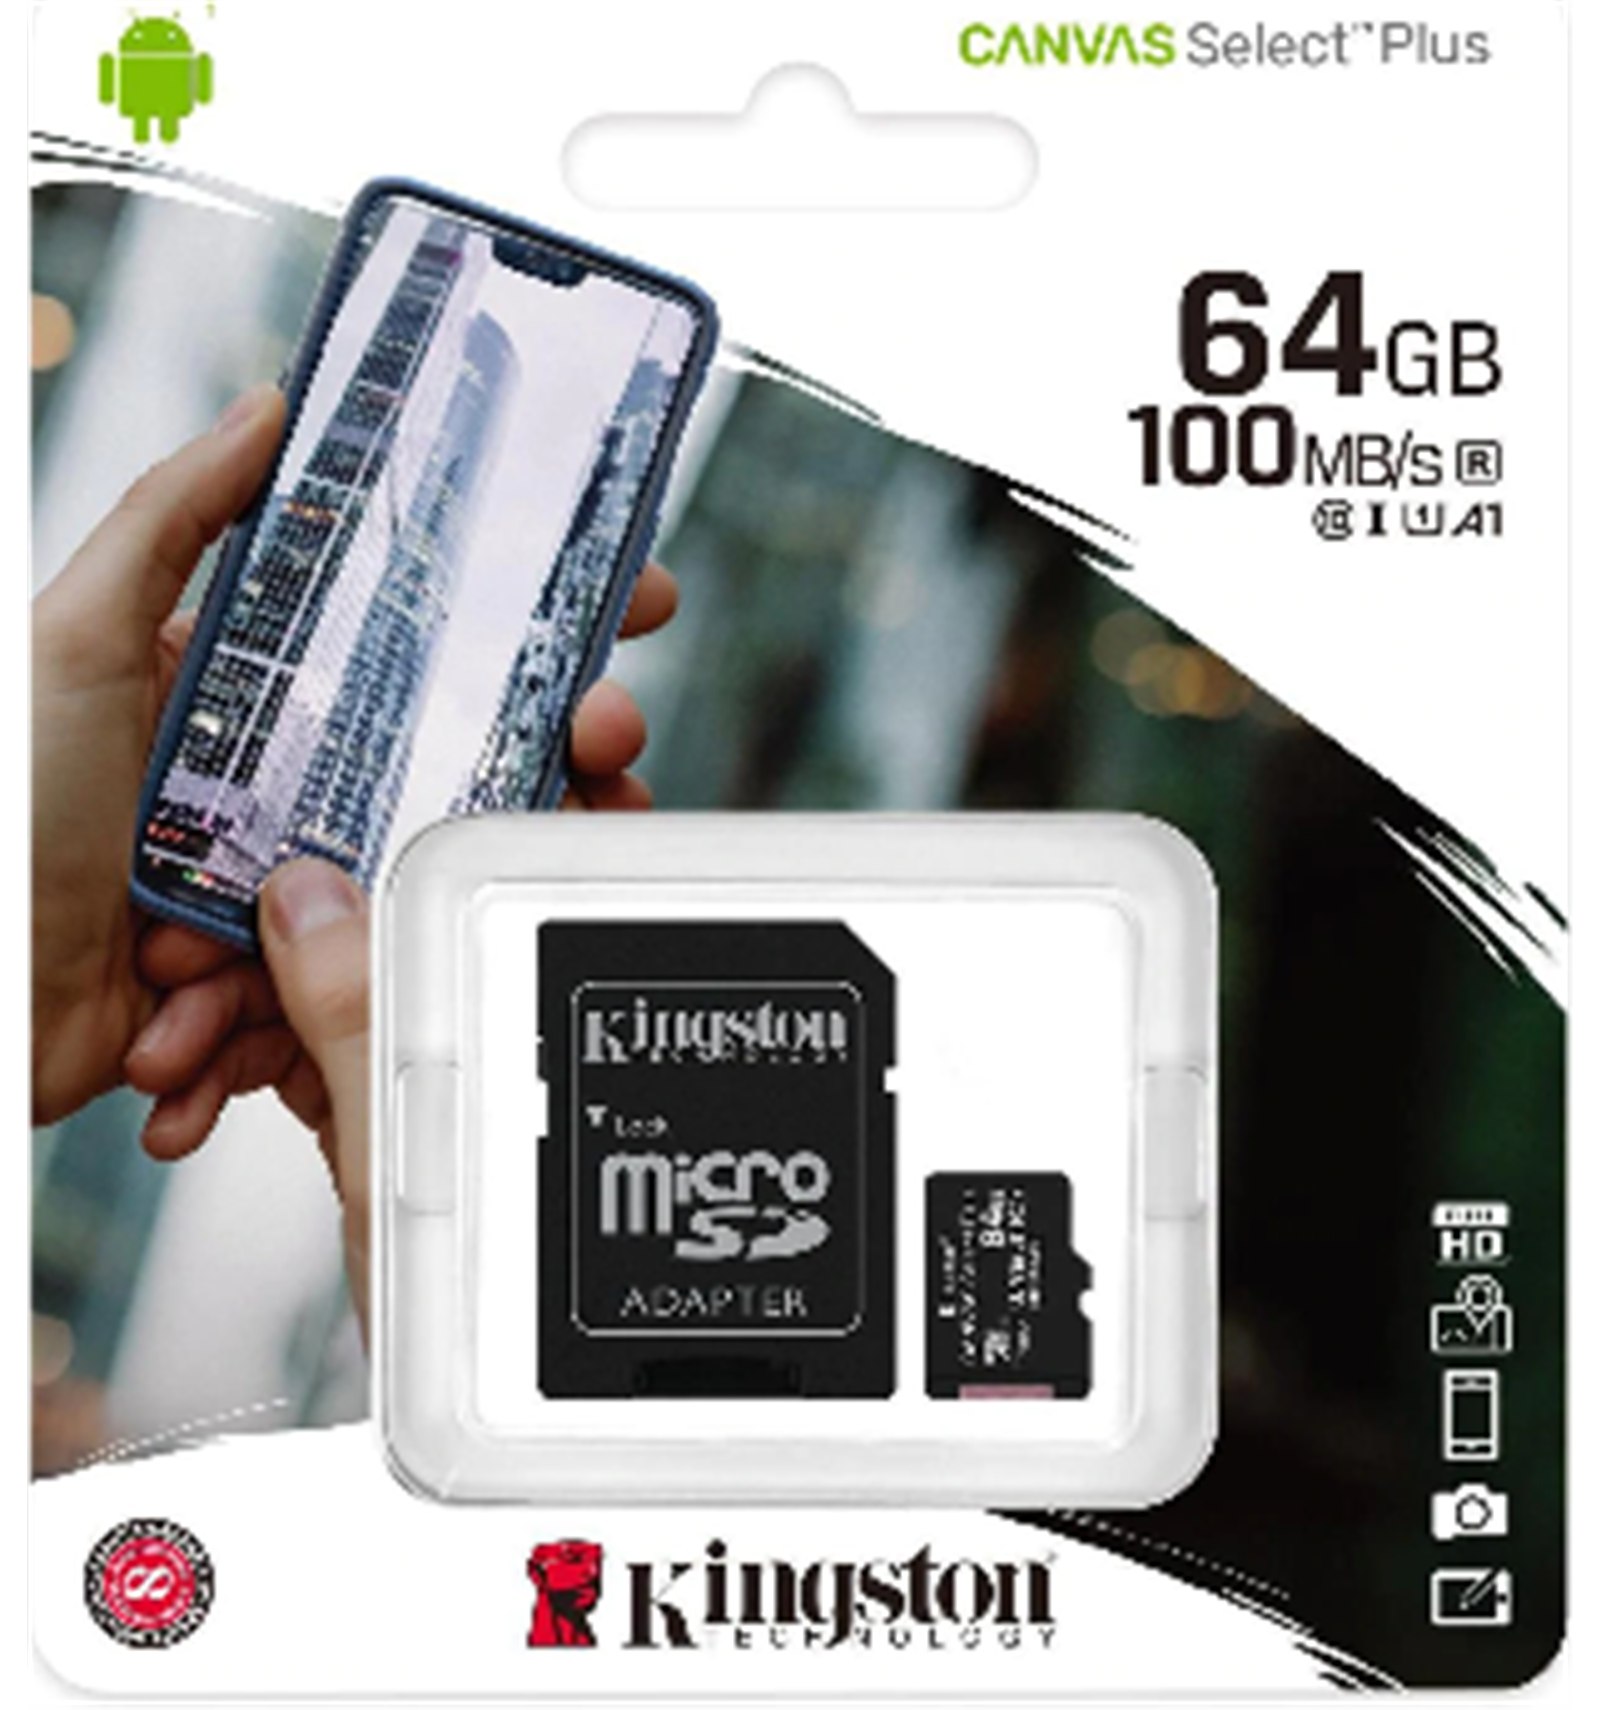 Kingston  Canvas Select Plus (microSDXC, 64GB, U1, UHS-I) 